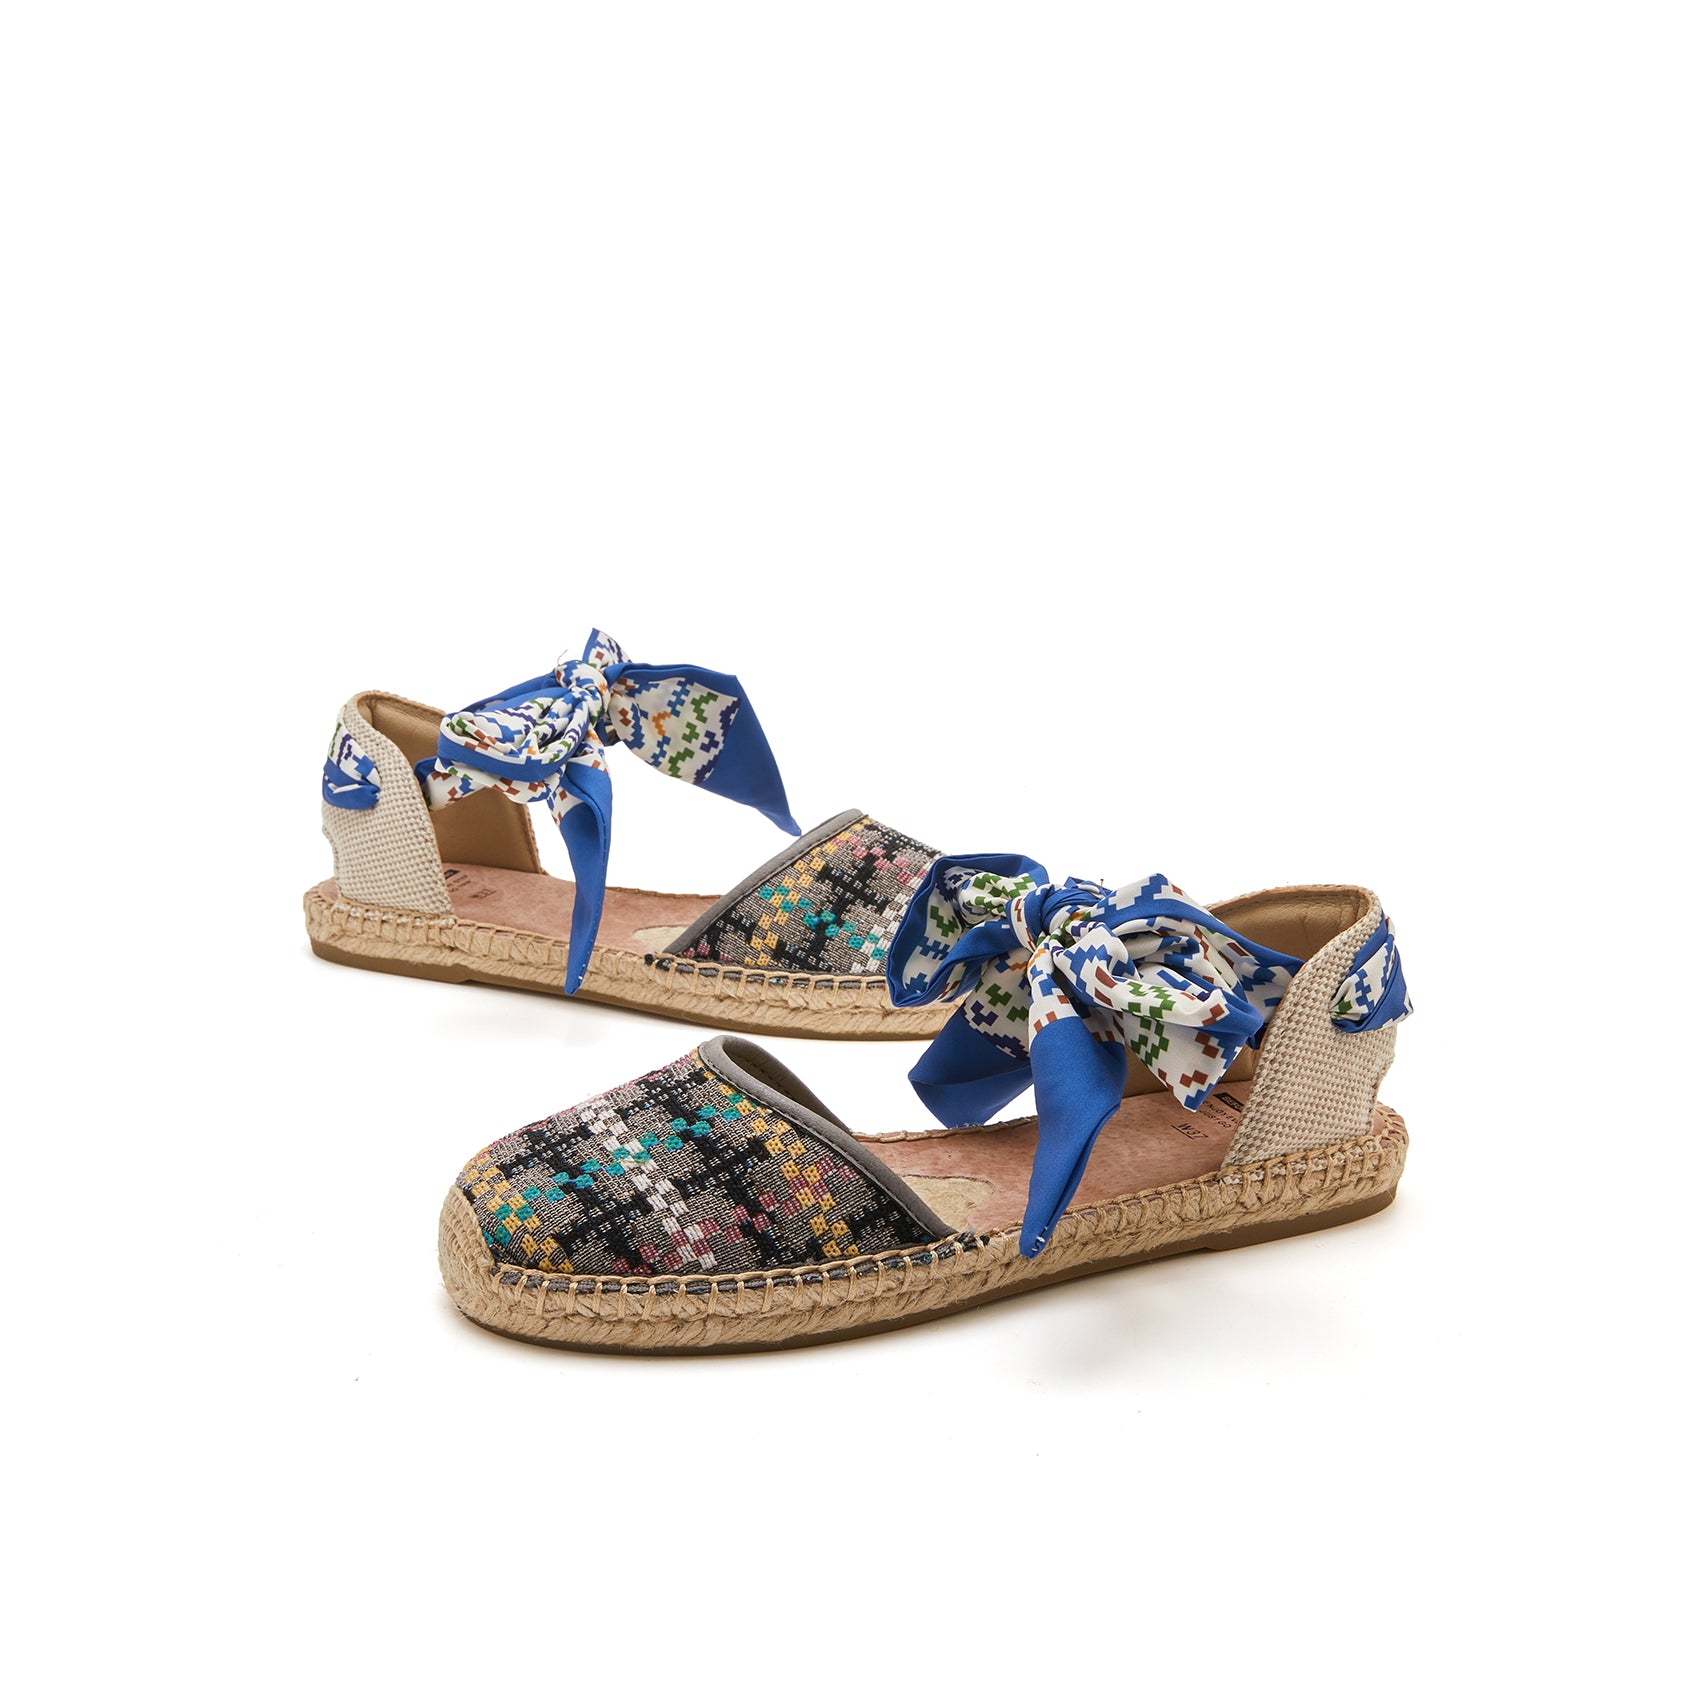 JOY&MARIO Handmade Women’s Slip-On Espadrille Fabric Loafers Flats Sandal in Blue-05332W